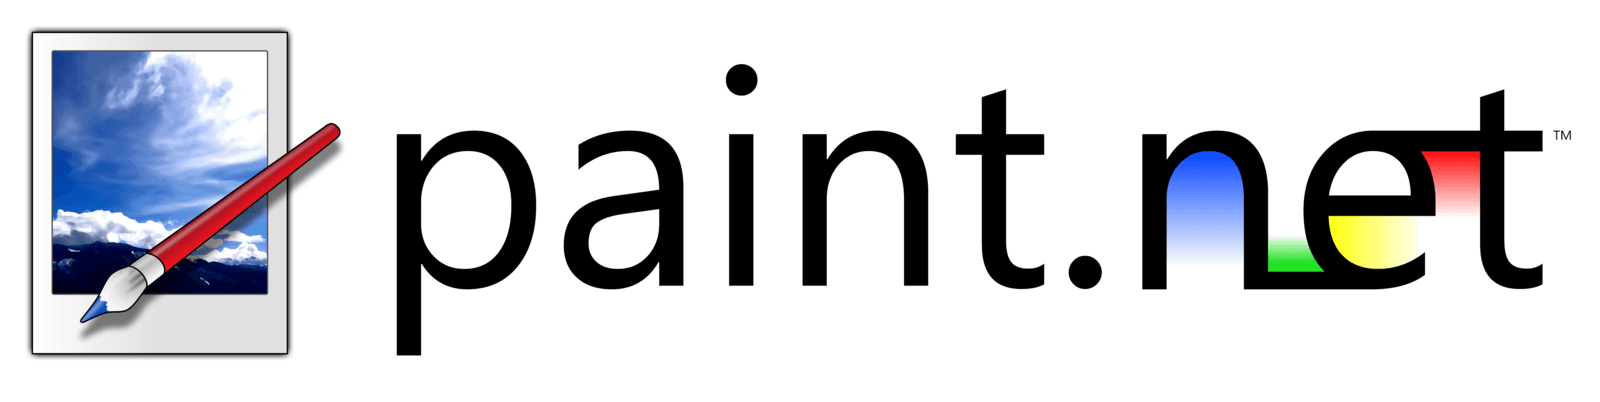 Paint Software Logo - Paint.NET - Photo Editing Software [Free] - Paksharez